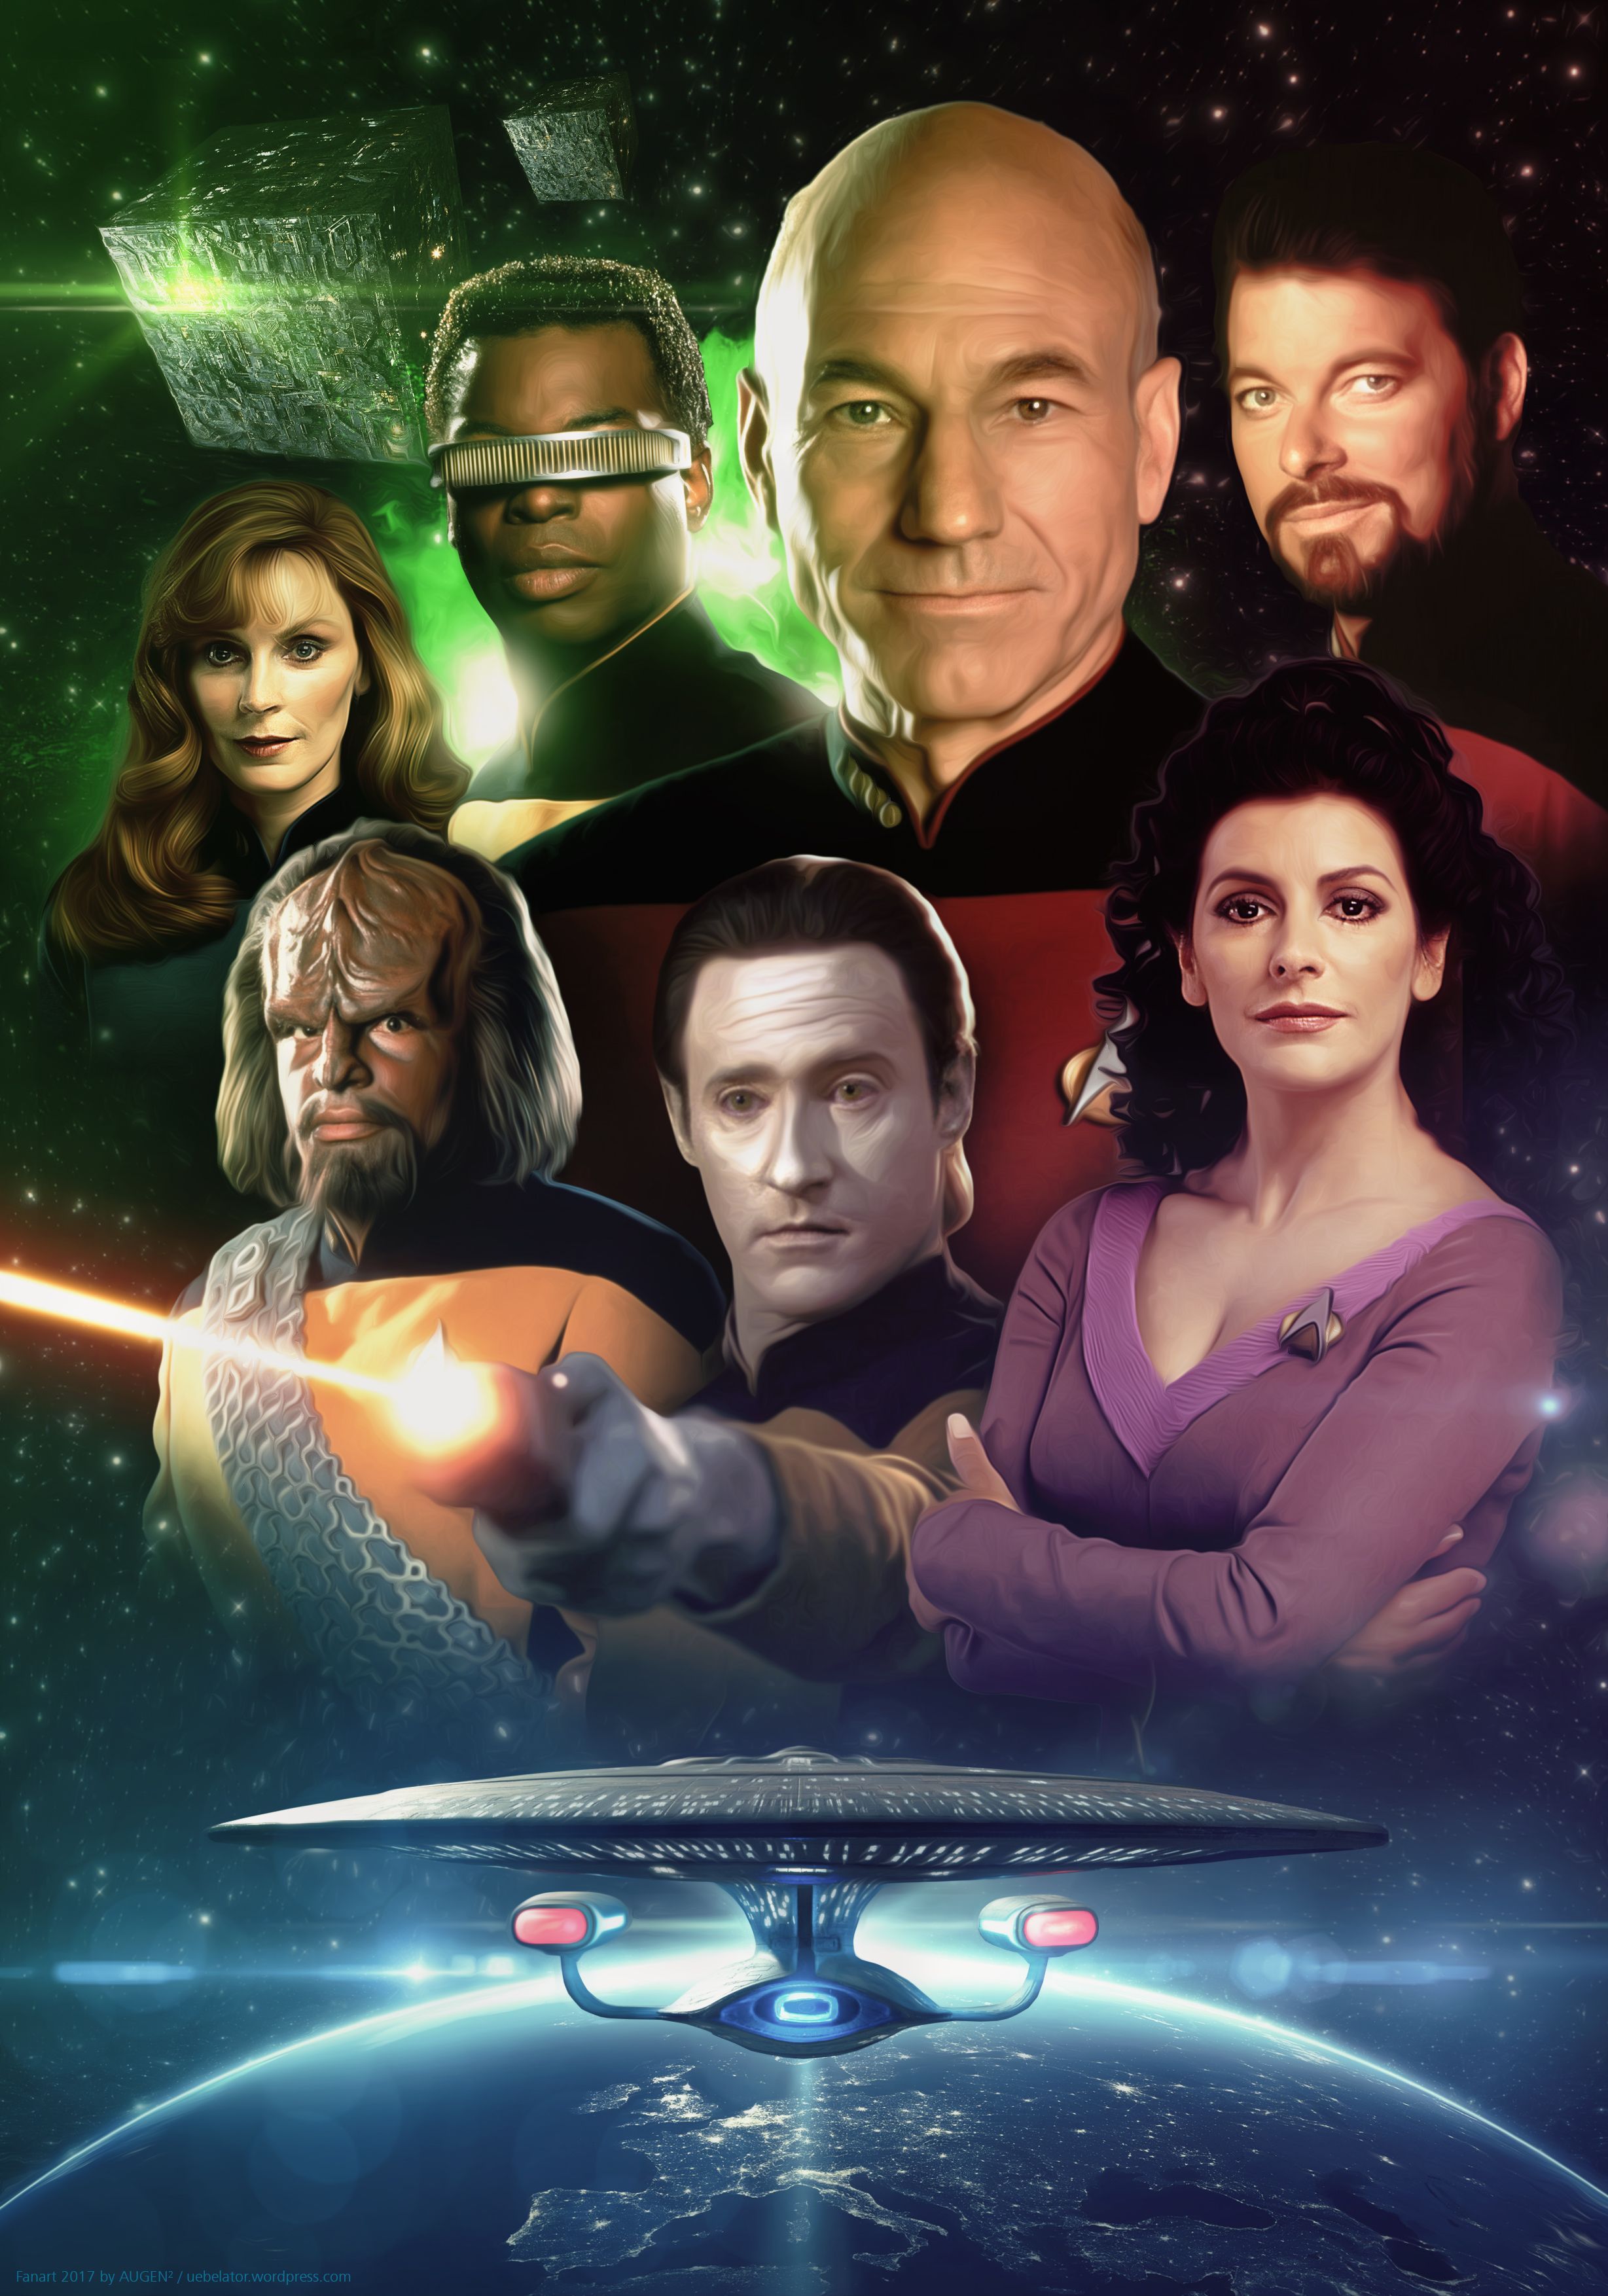 Star Trek The Next Generation Fanart Poster. Star trek posters